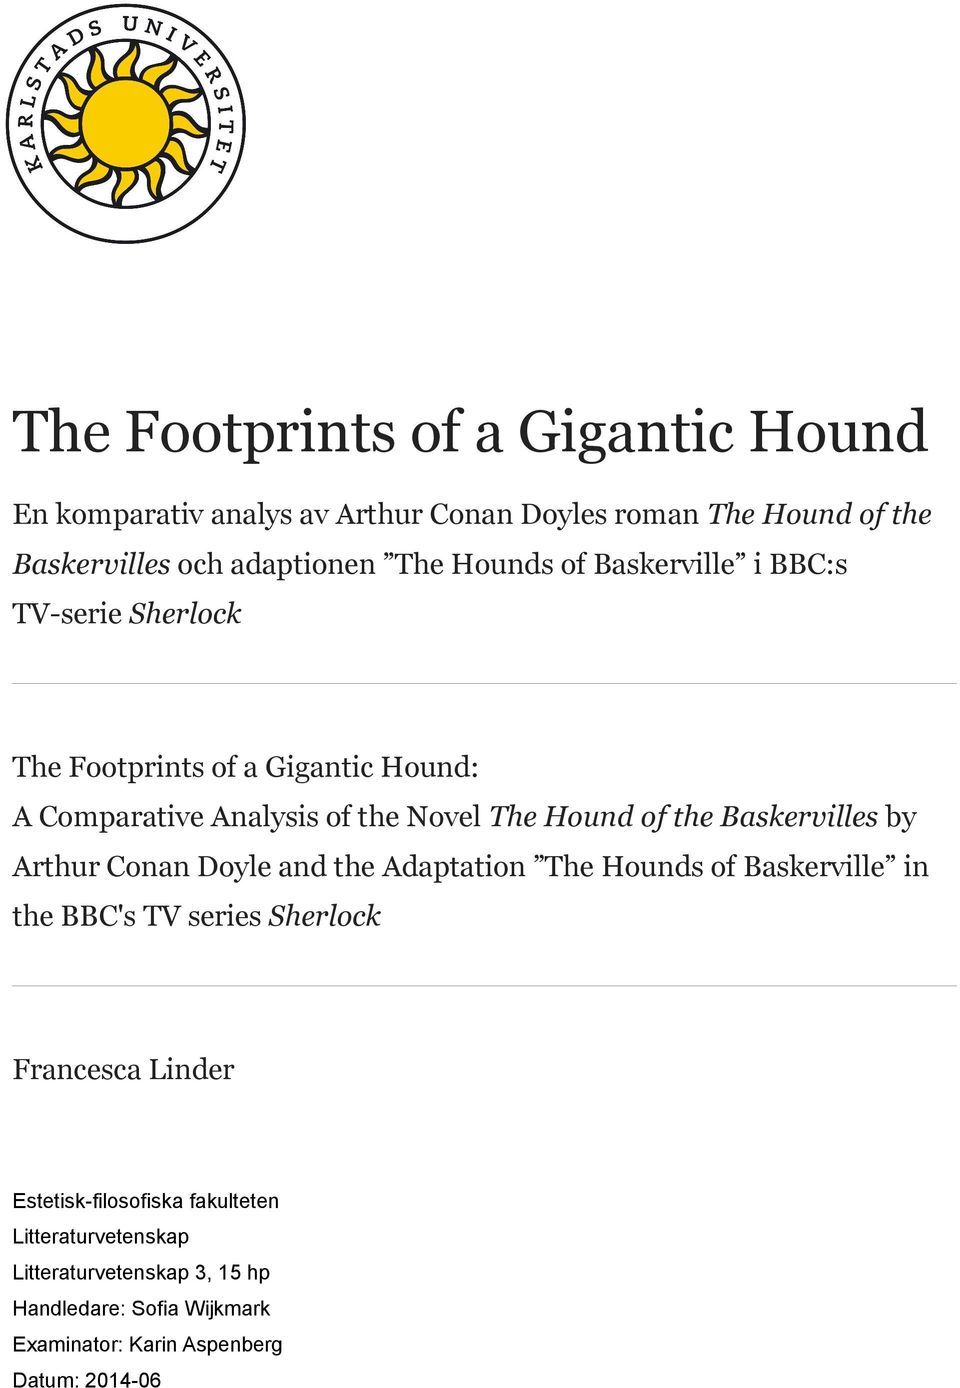 The of a Gigantic Hound - PDF Gratis nedladdning